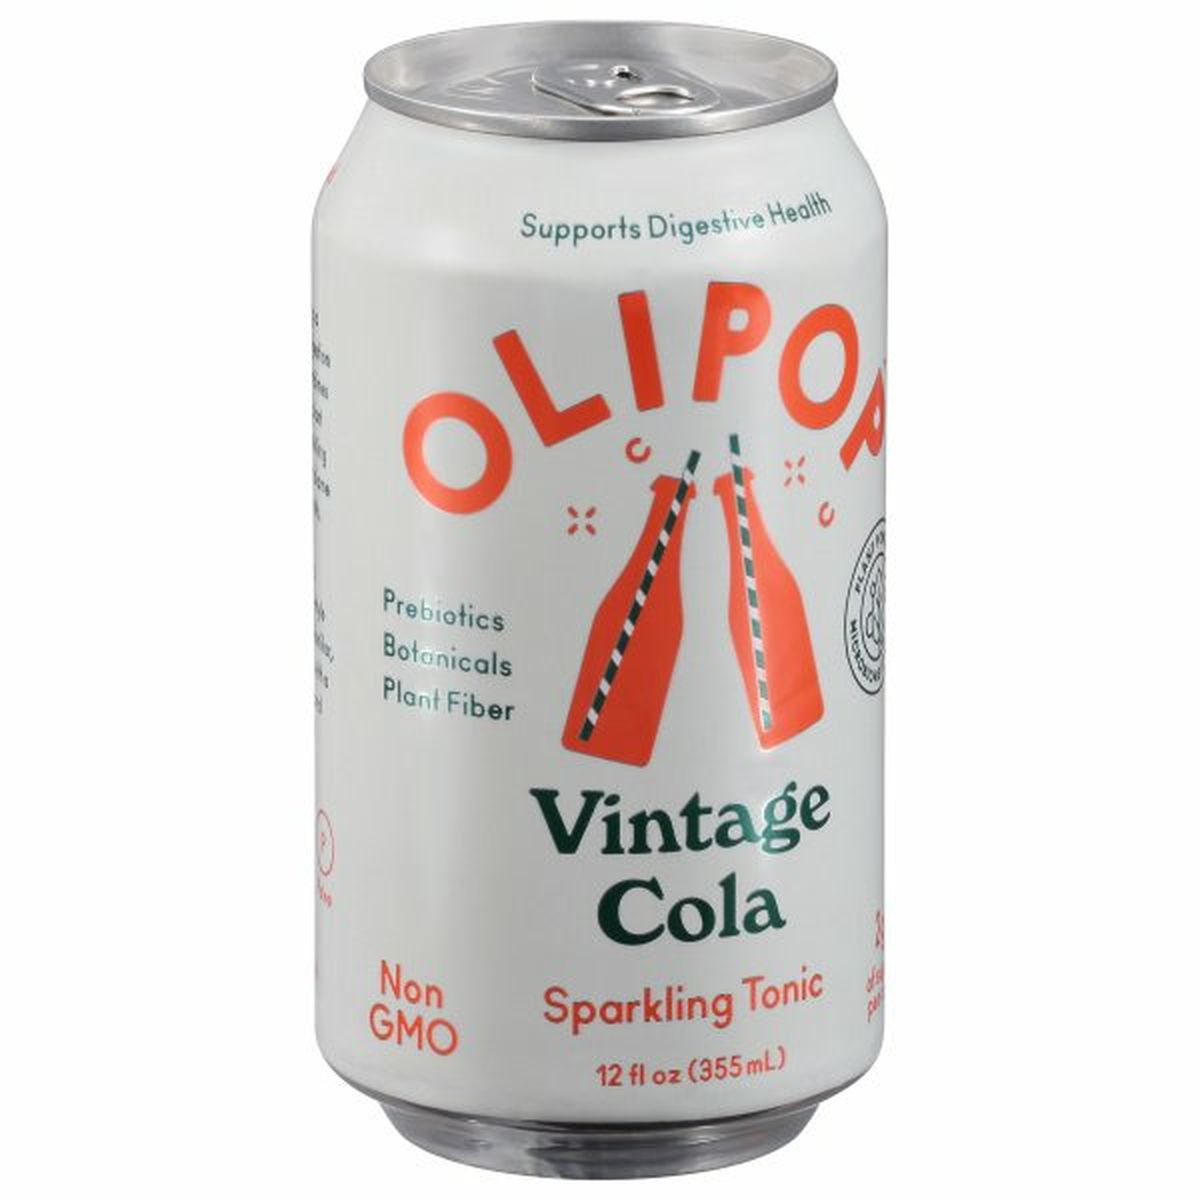 Calories in Olipop Sparkling Tonic, Vintage Cola